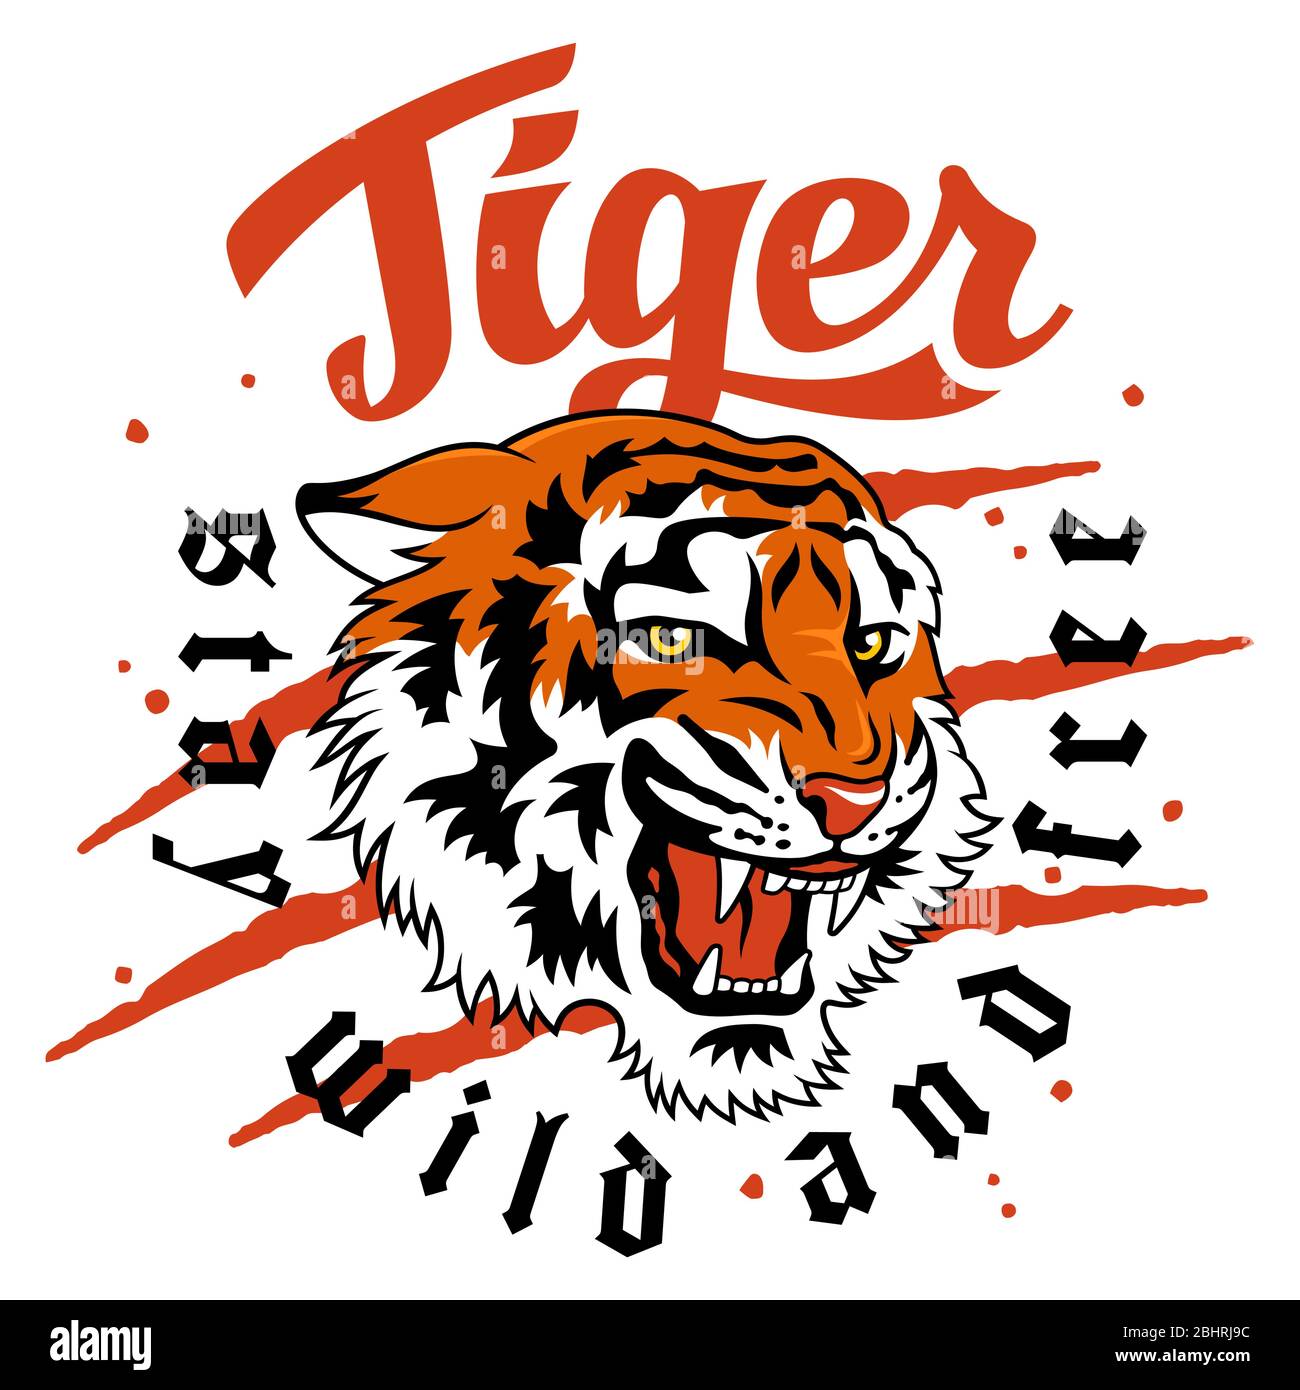 Japanese tiger vector illustration and trendy slogan for t-shirt design Stock Vector